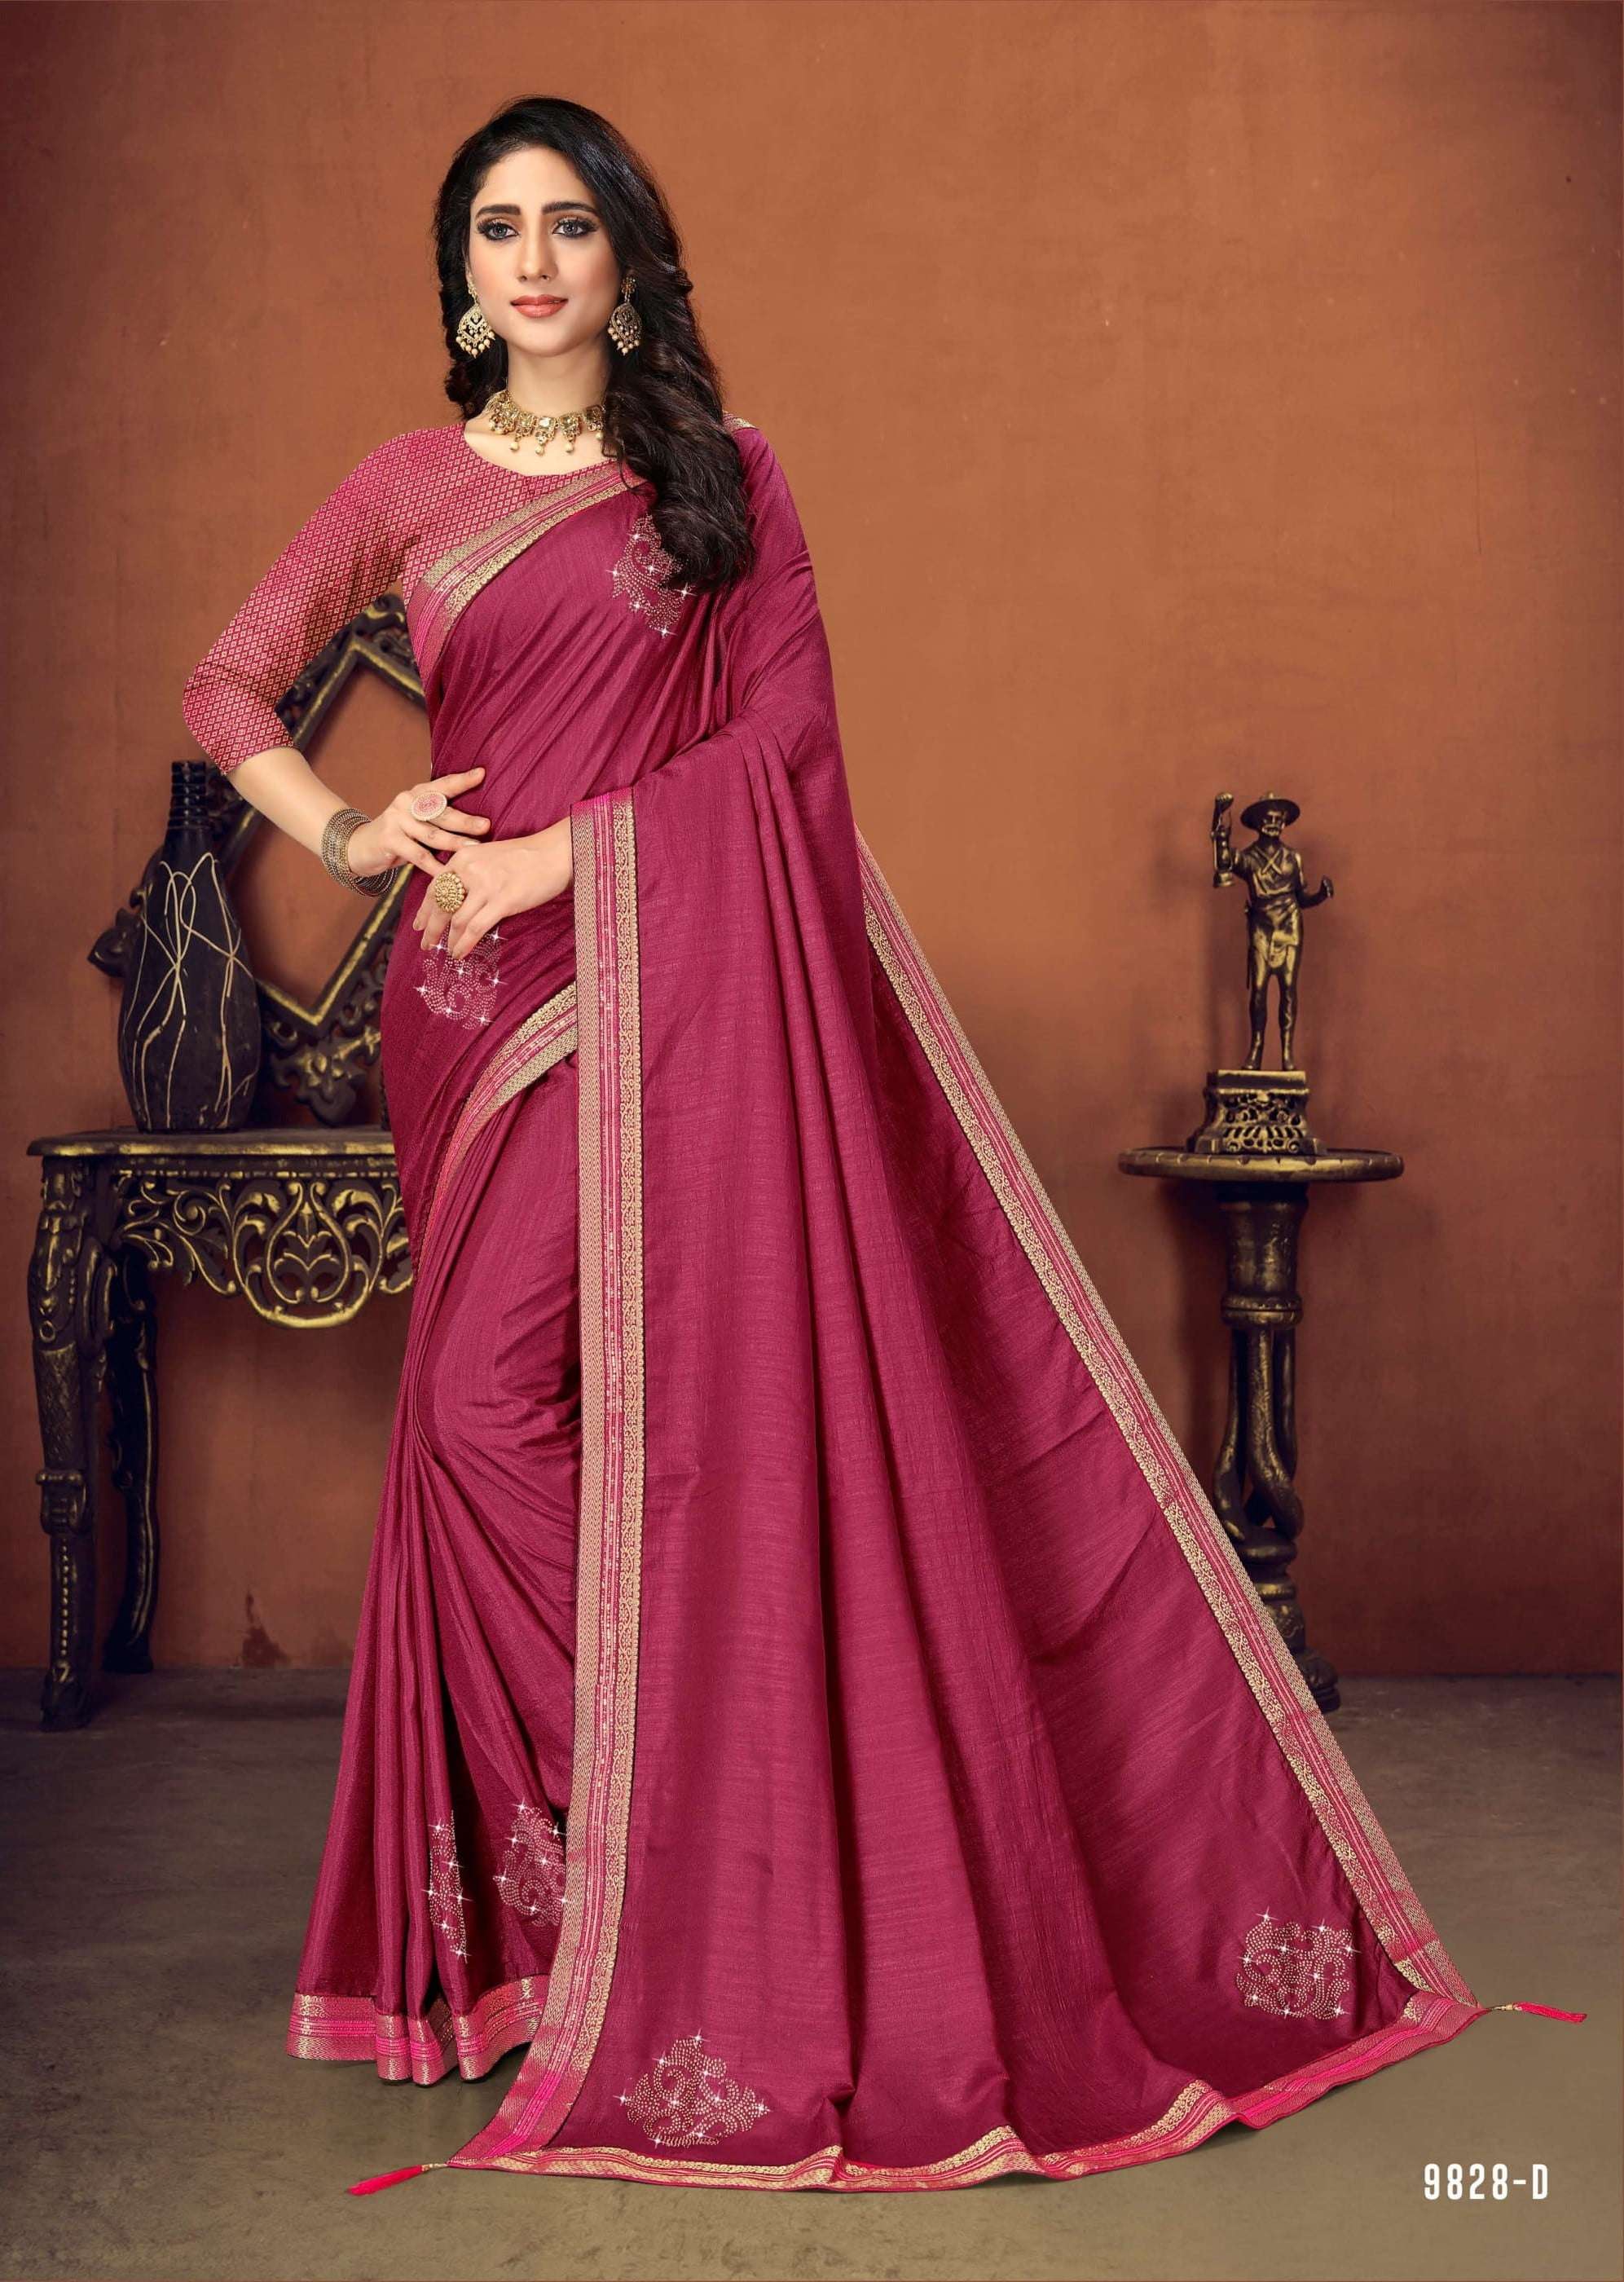 Details about   Silk Cotton Designer Theme Saree Blouse Sari Indian Pakistani Party Wedding Wear 